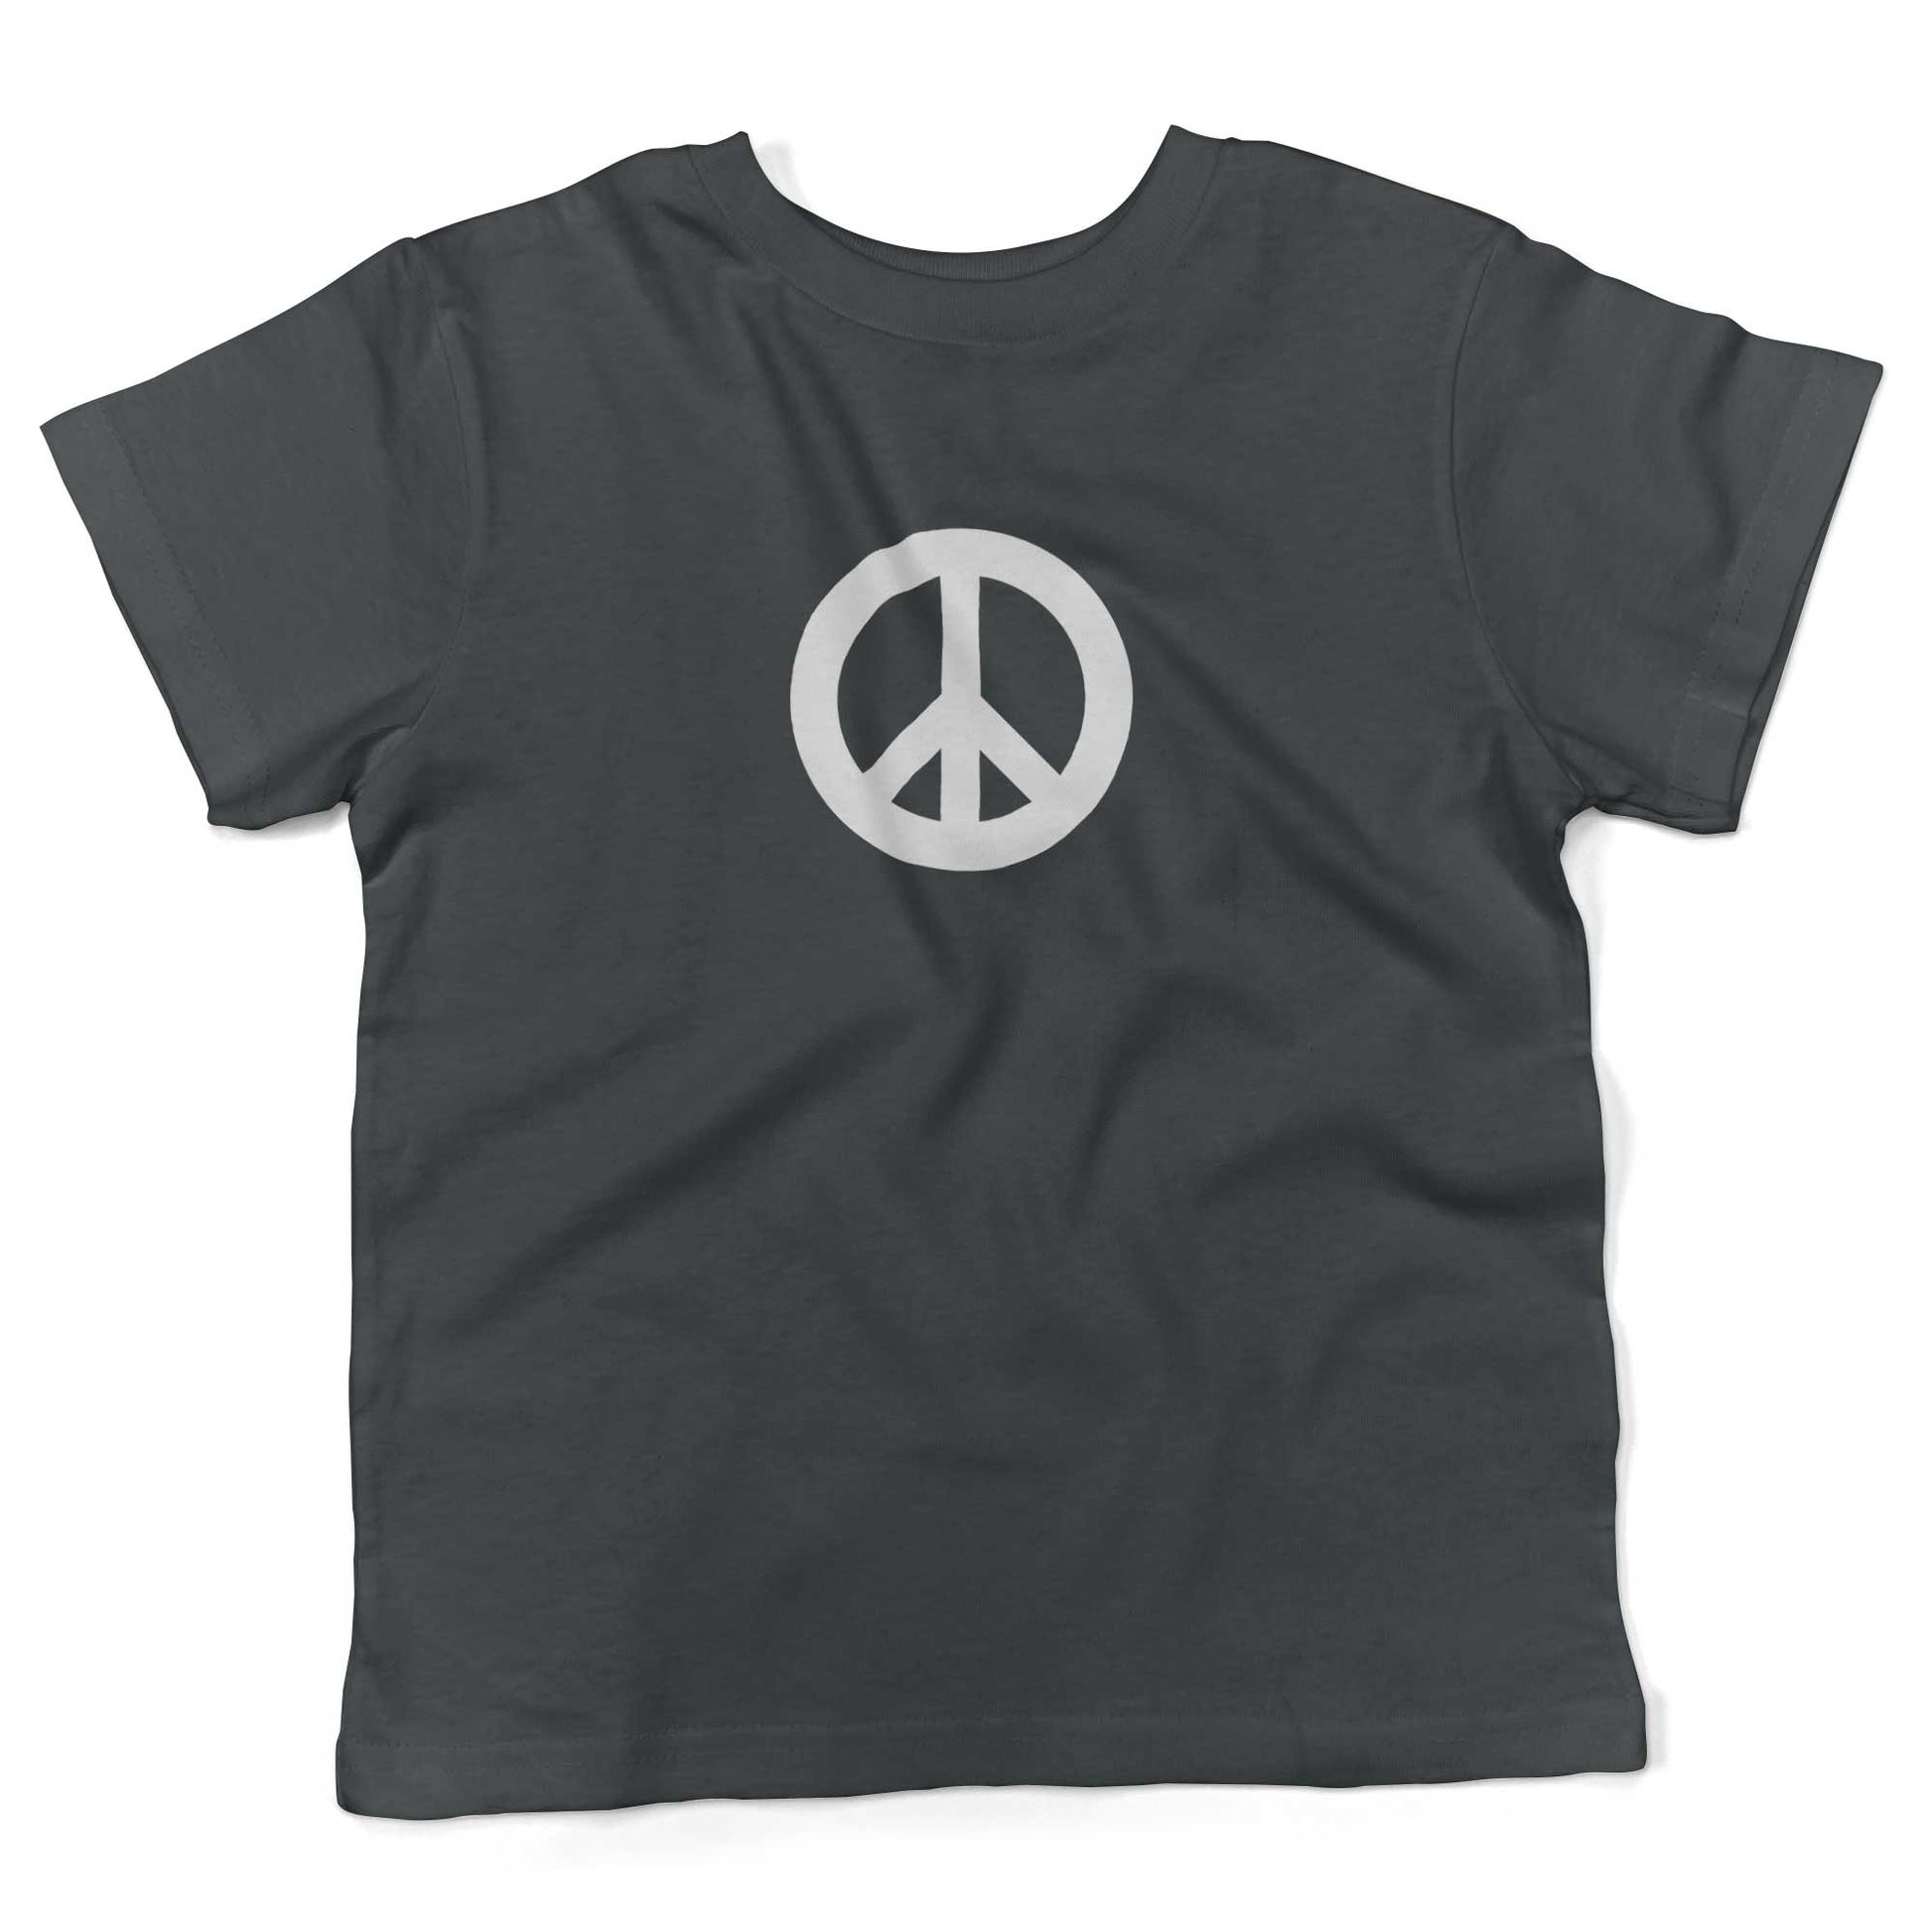 Peace Sign Toddler Shirt-Asphalt-2T